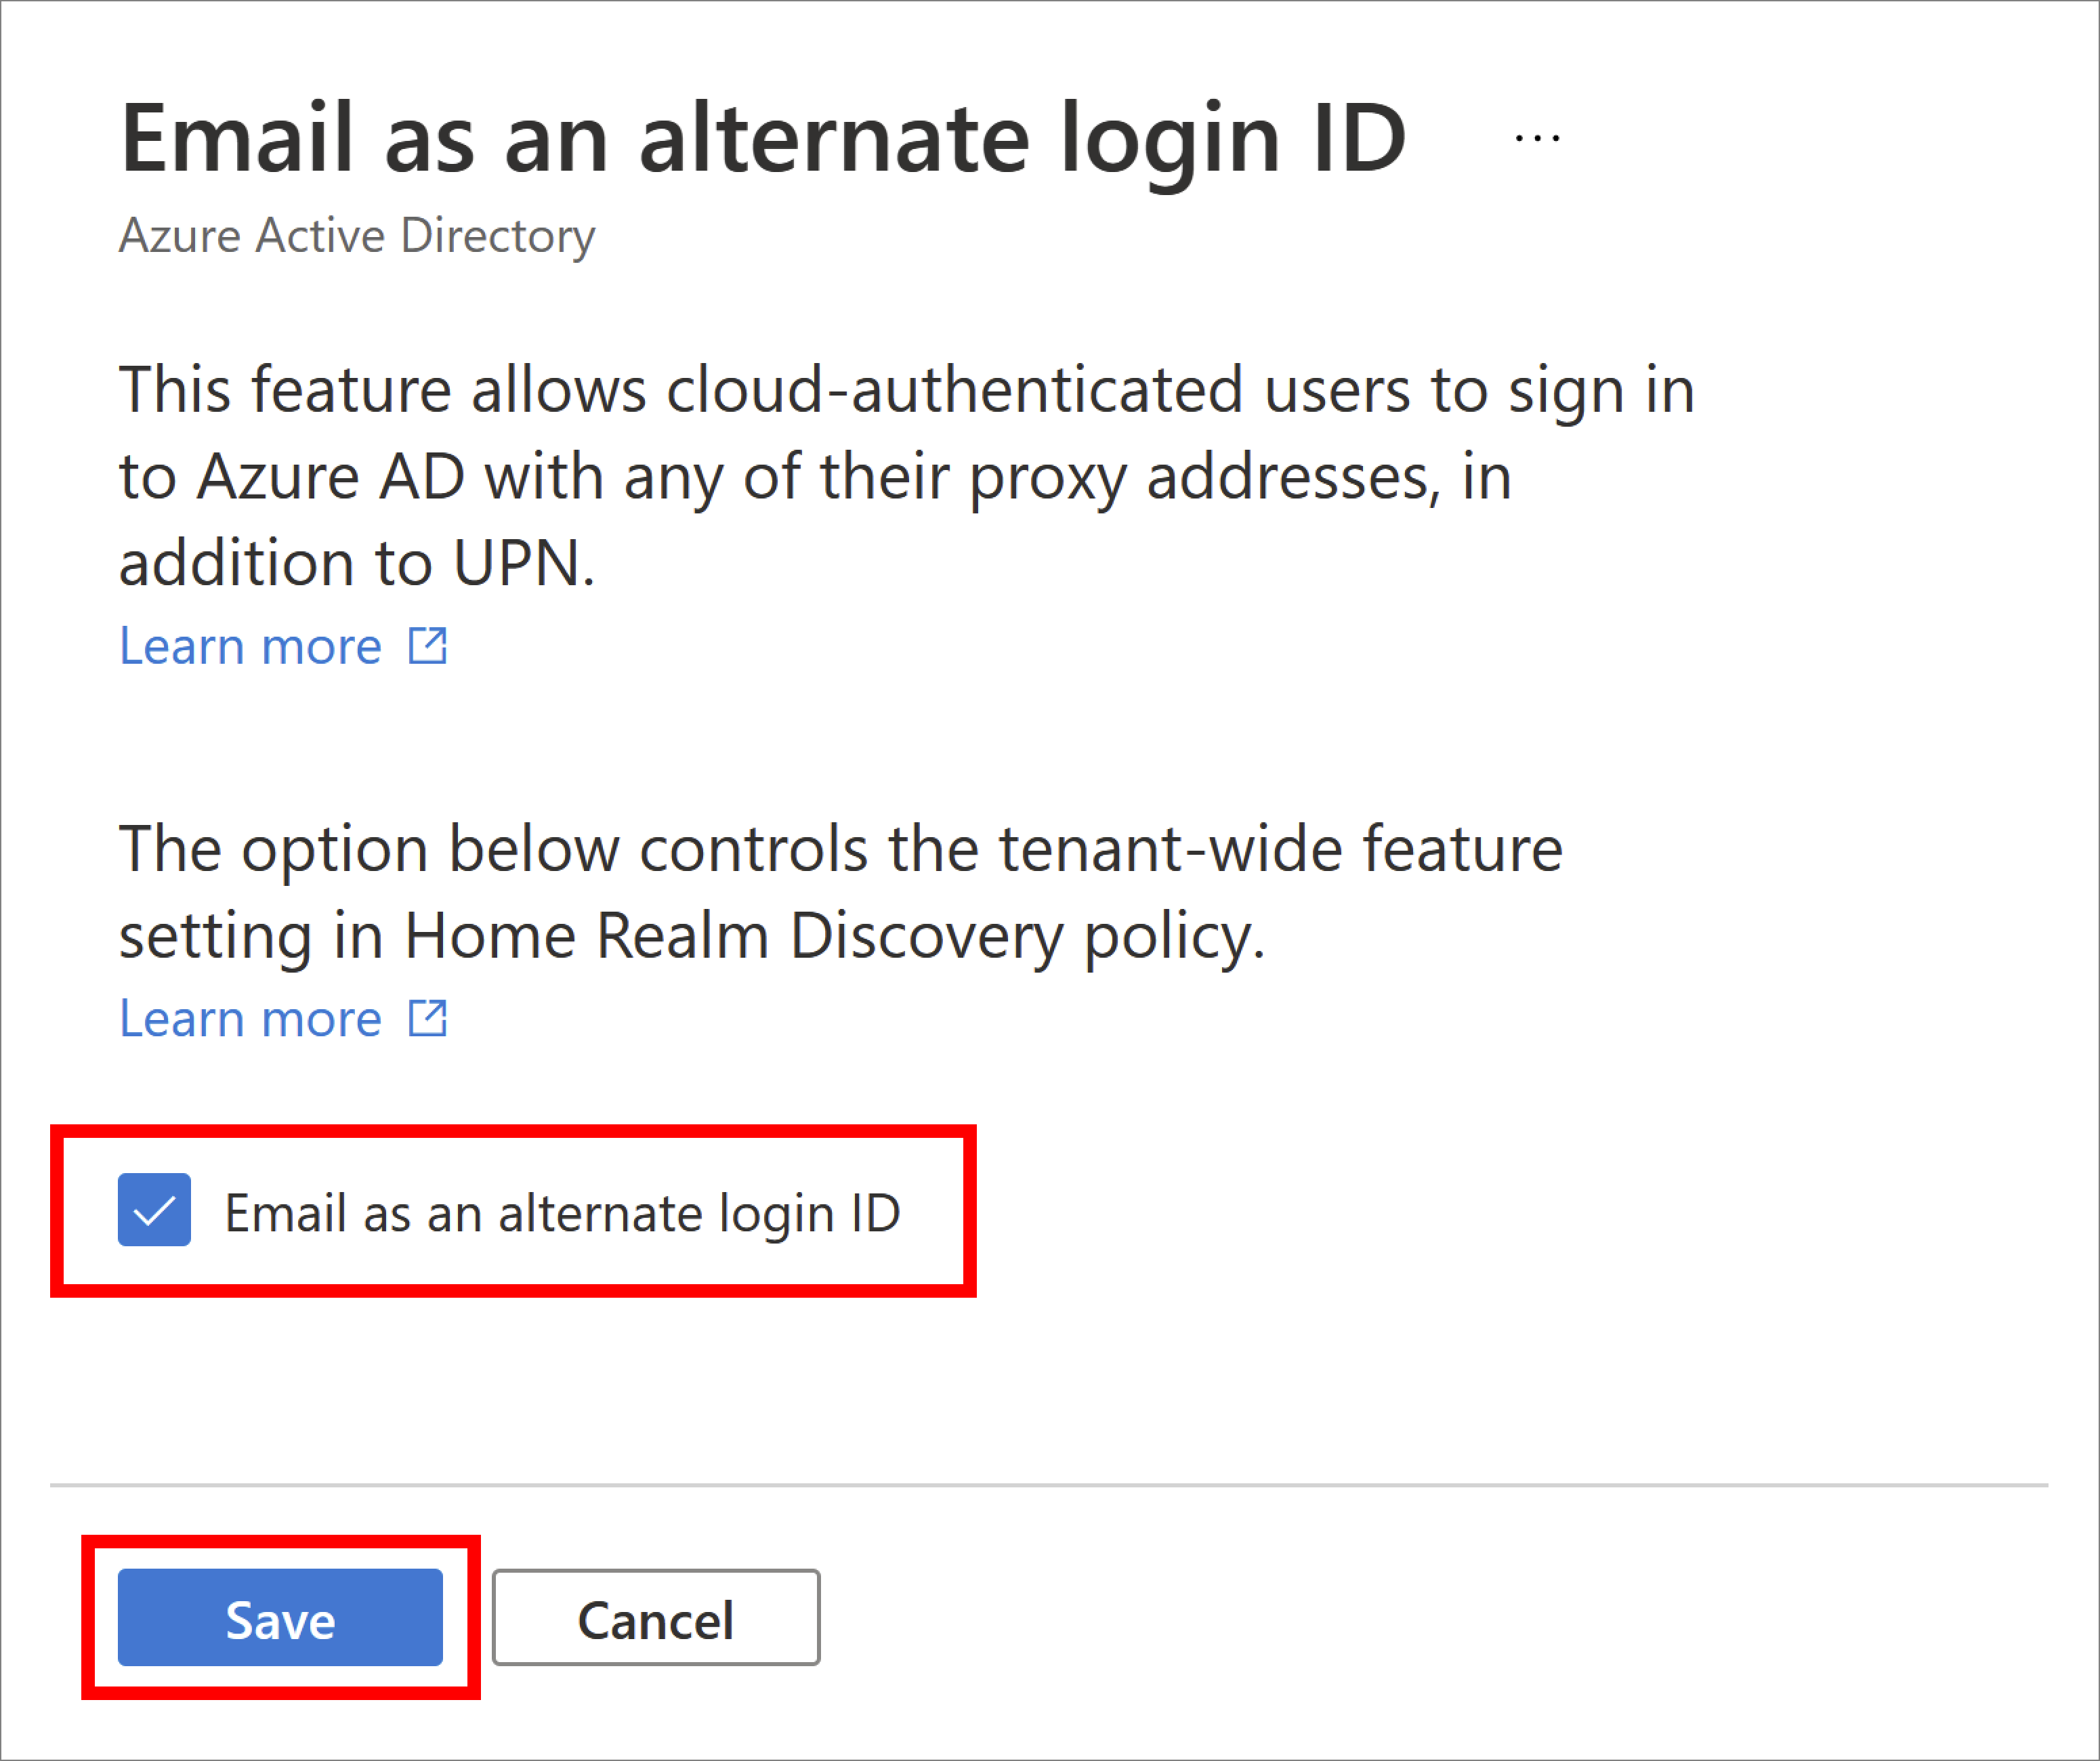 Screenshot of email as alternate login ID blade in the Azure portal.